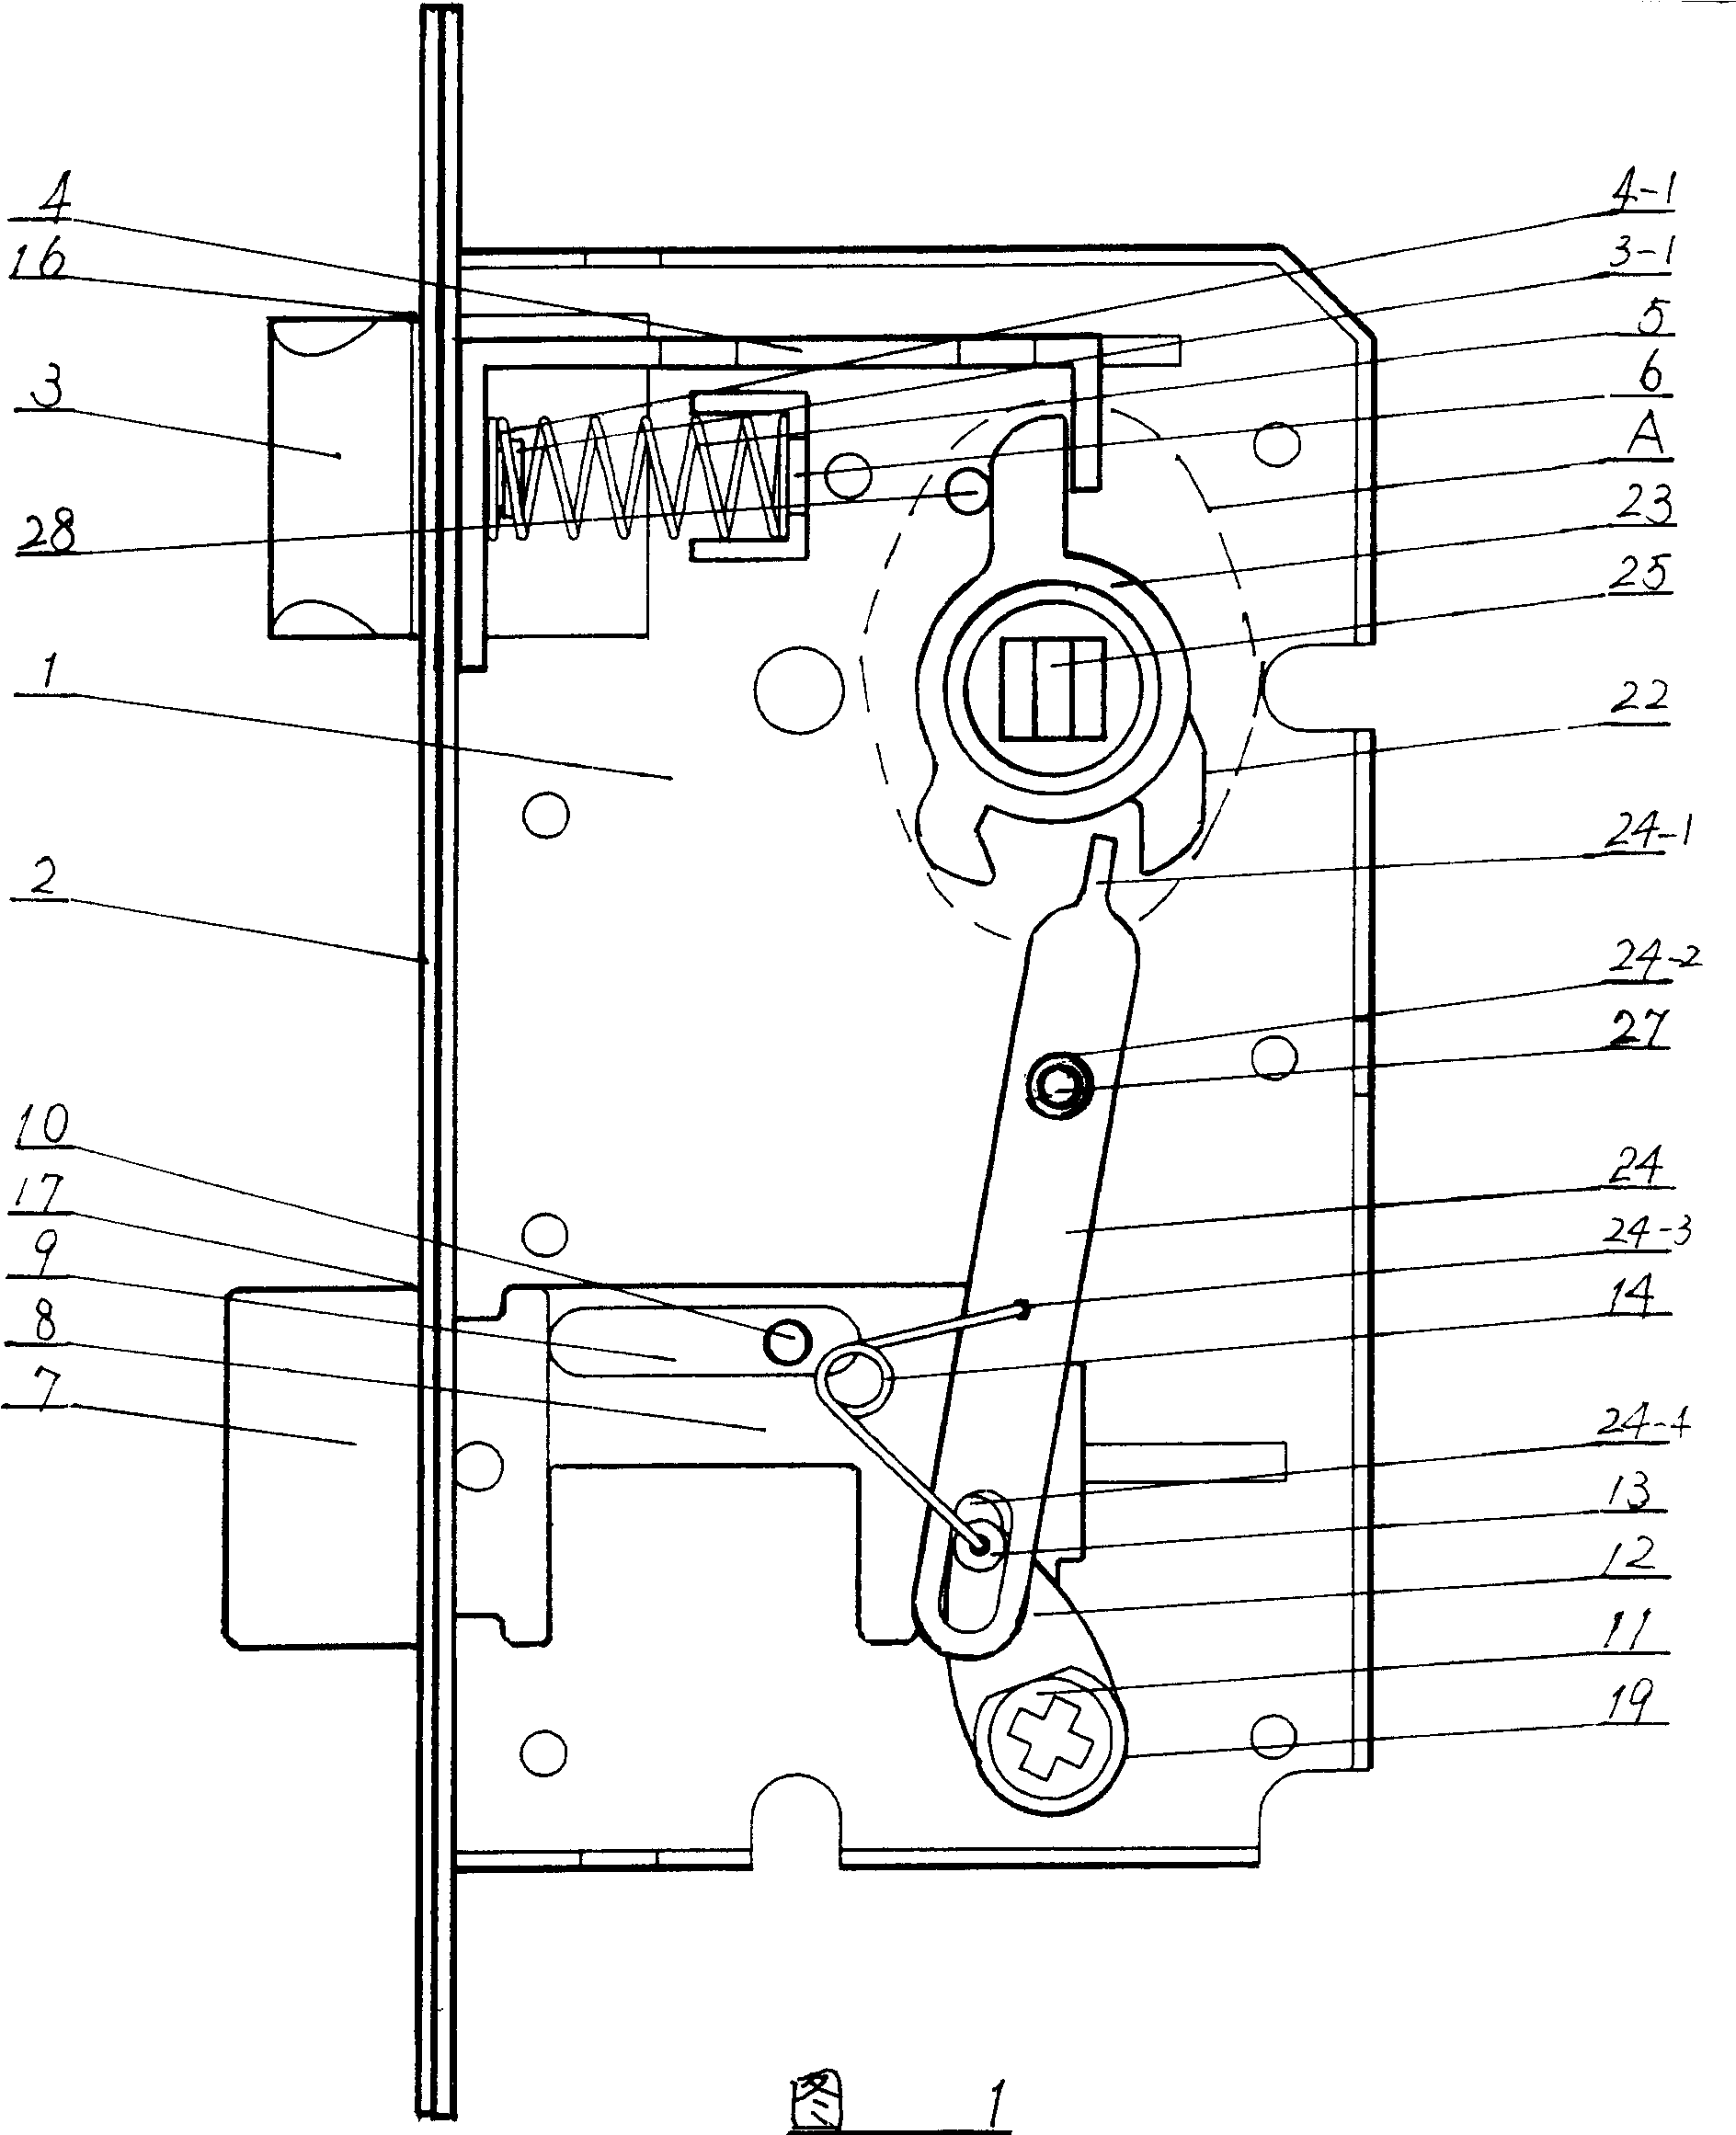 Superthin door lock with escaping type rotation block